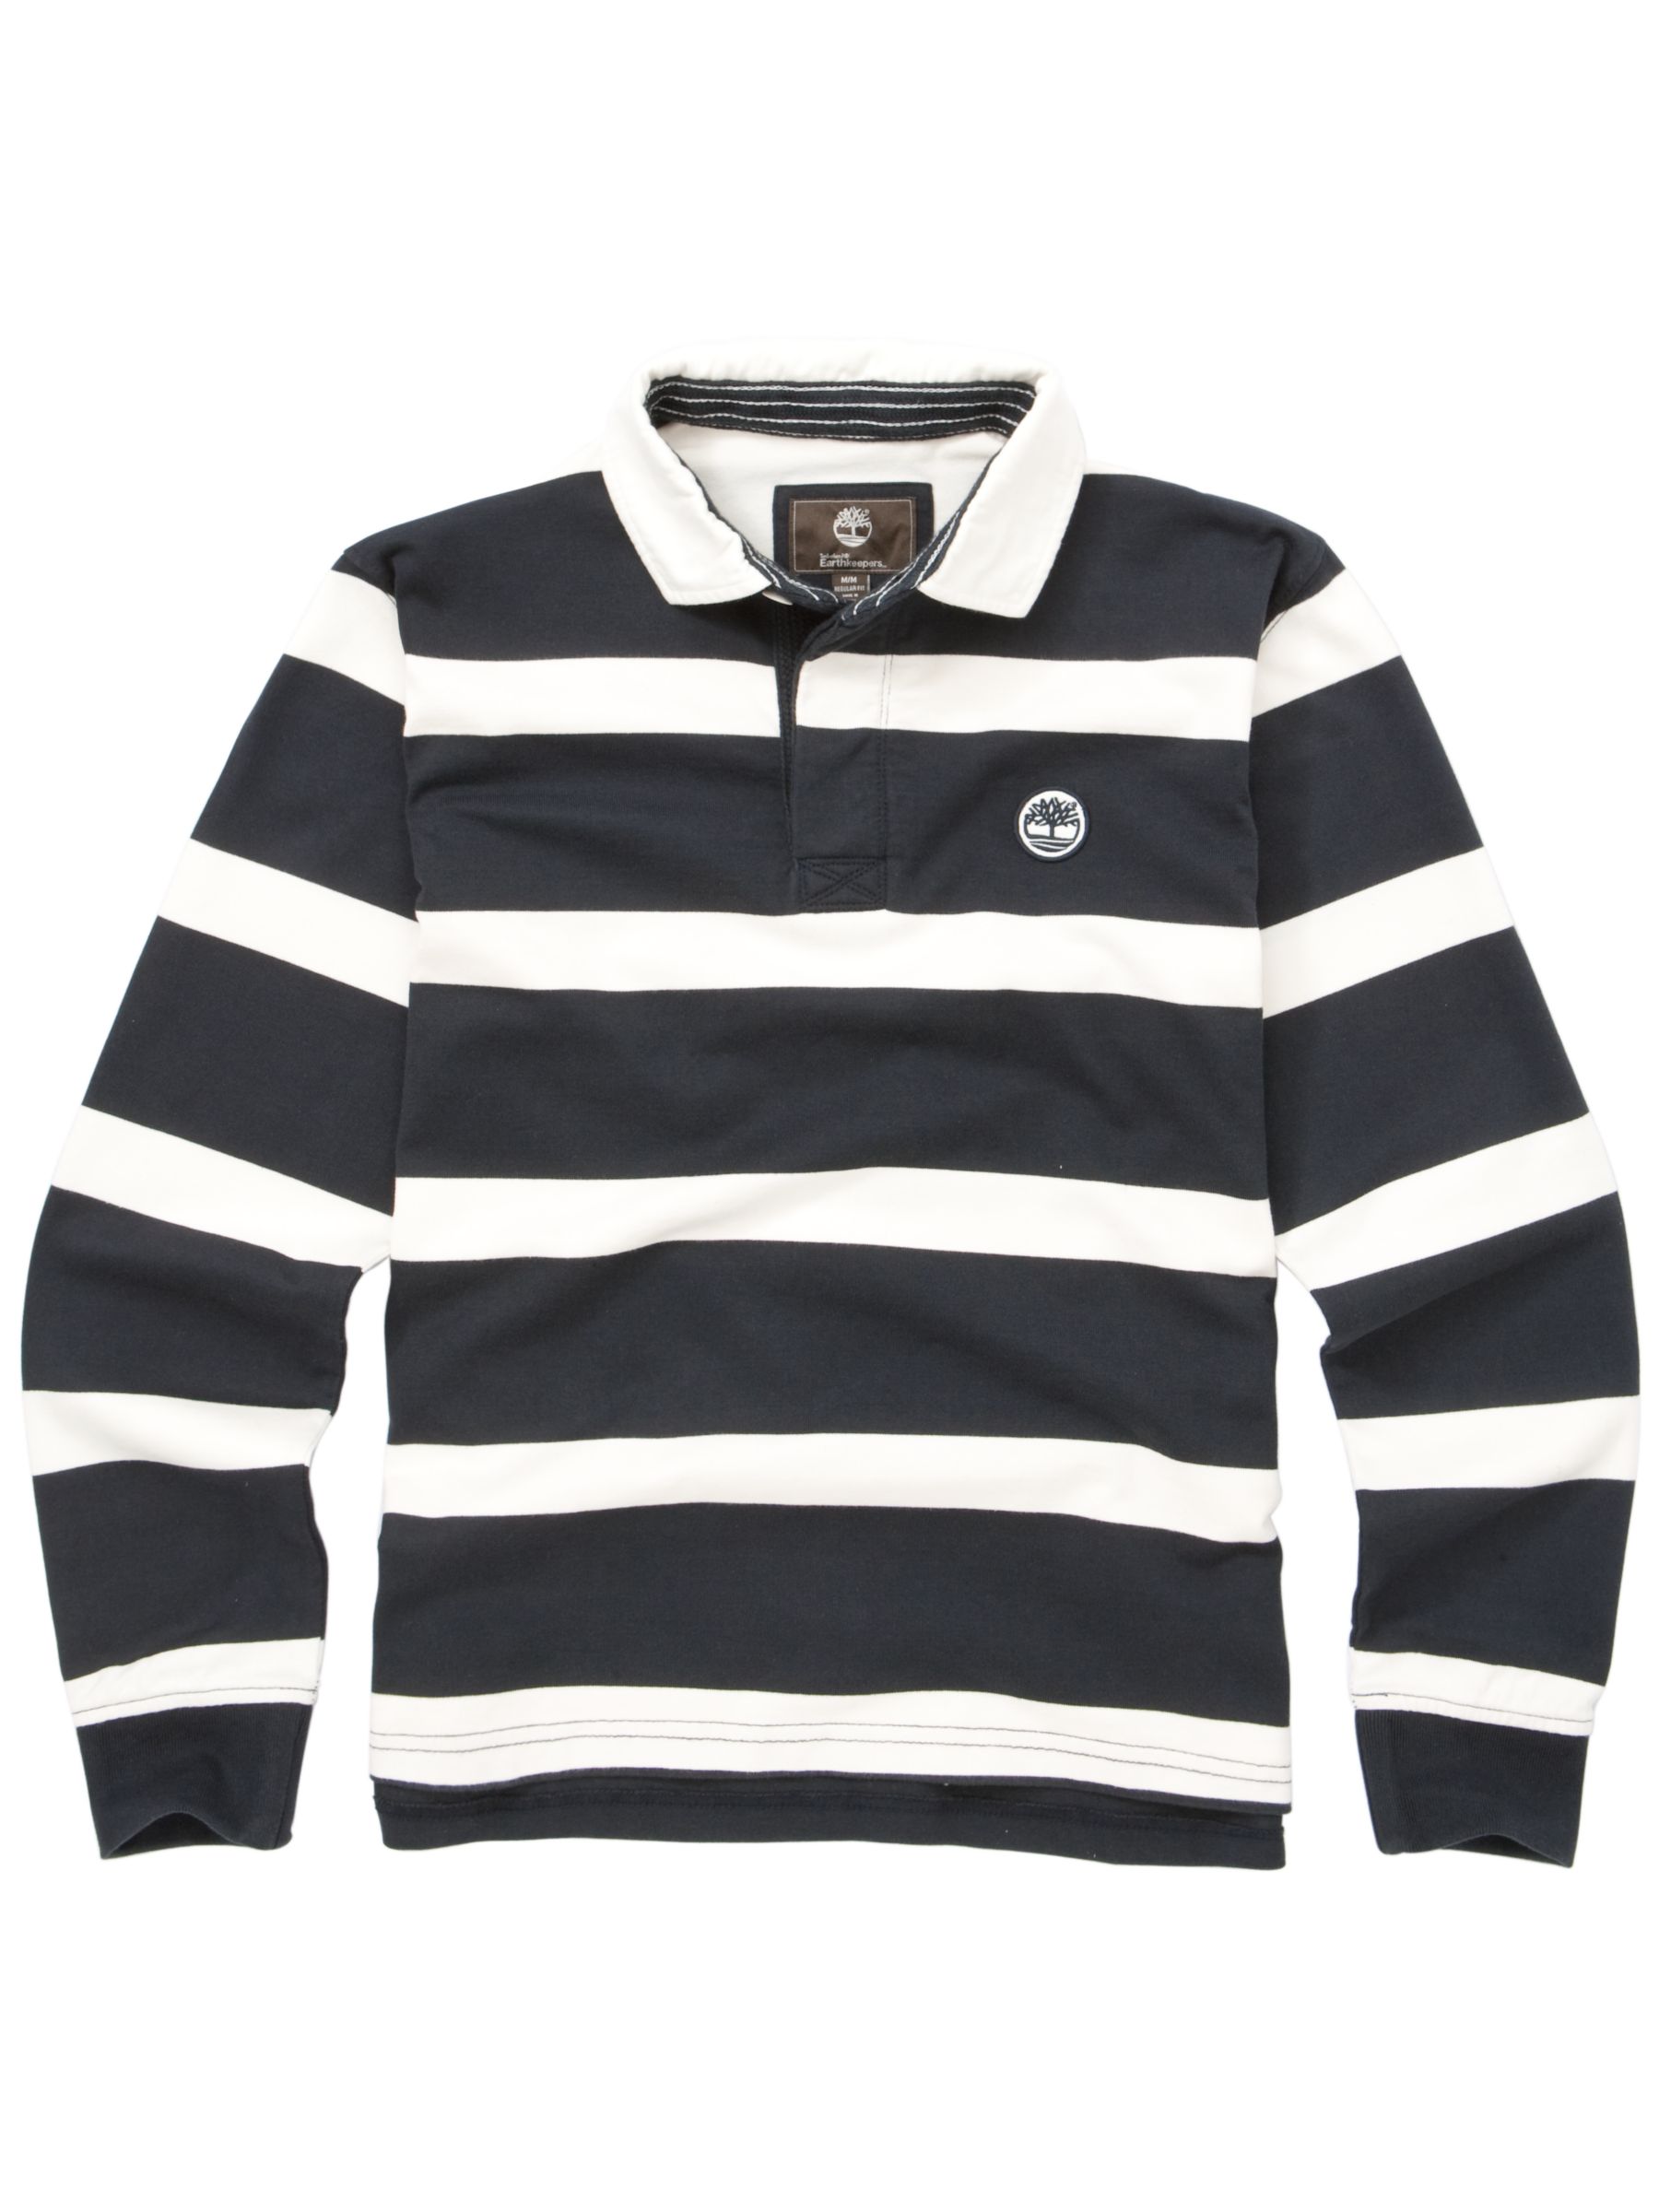 Timberland Stripe Rugby Shirt, Navy/white